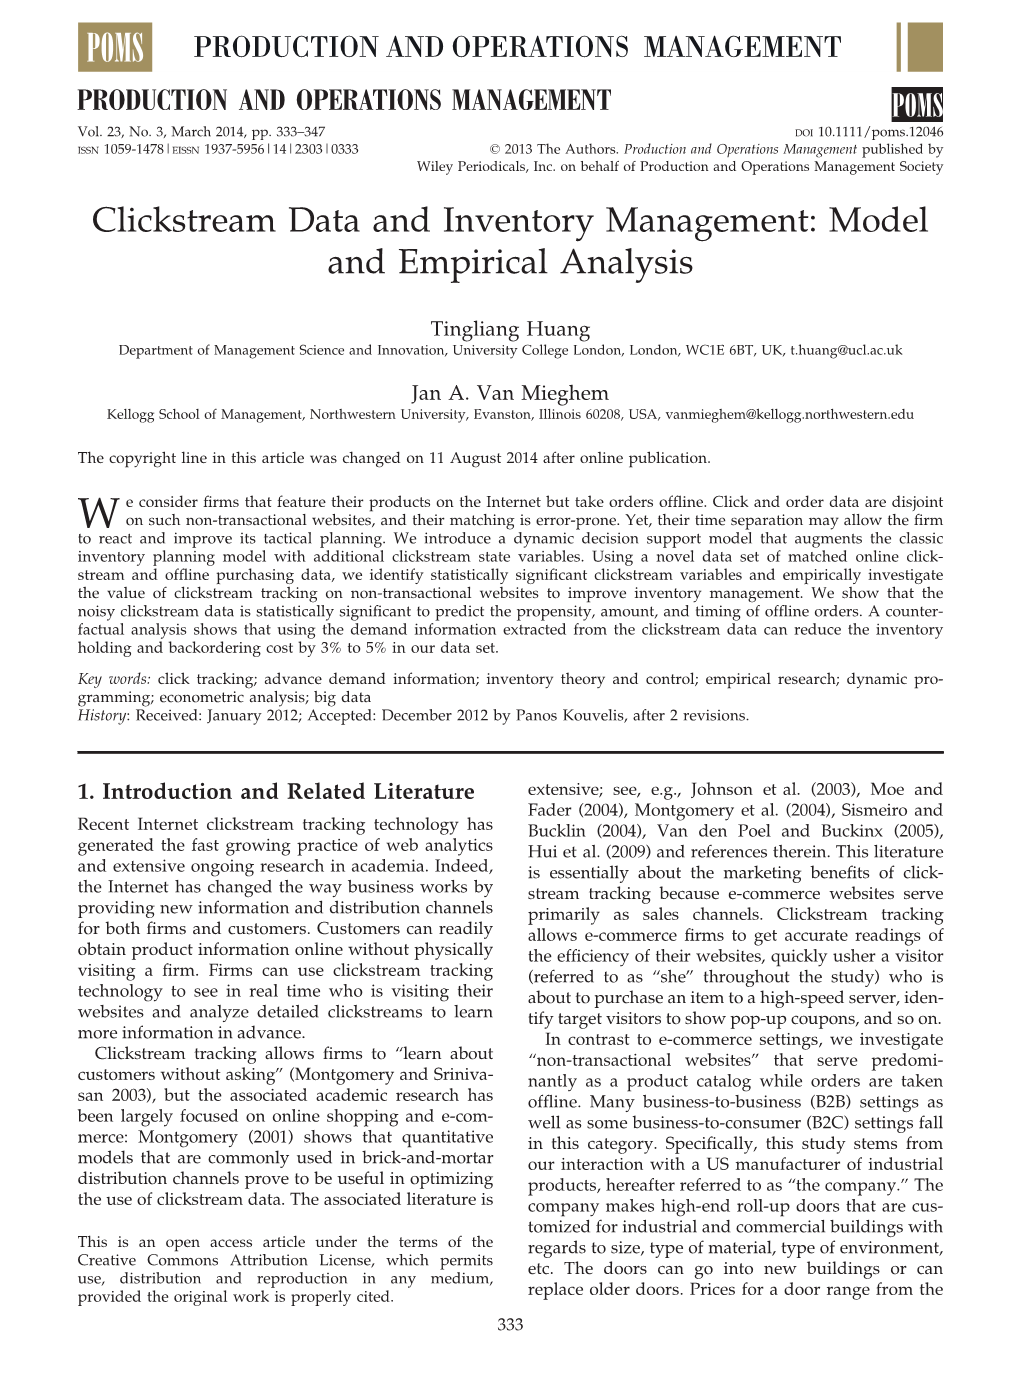 Clickstream Data and Inventory Management: Model and Empirical Analysis